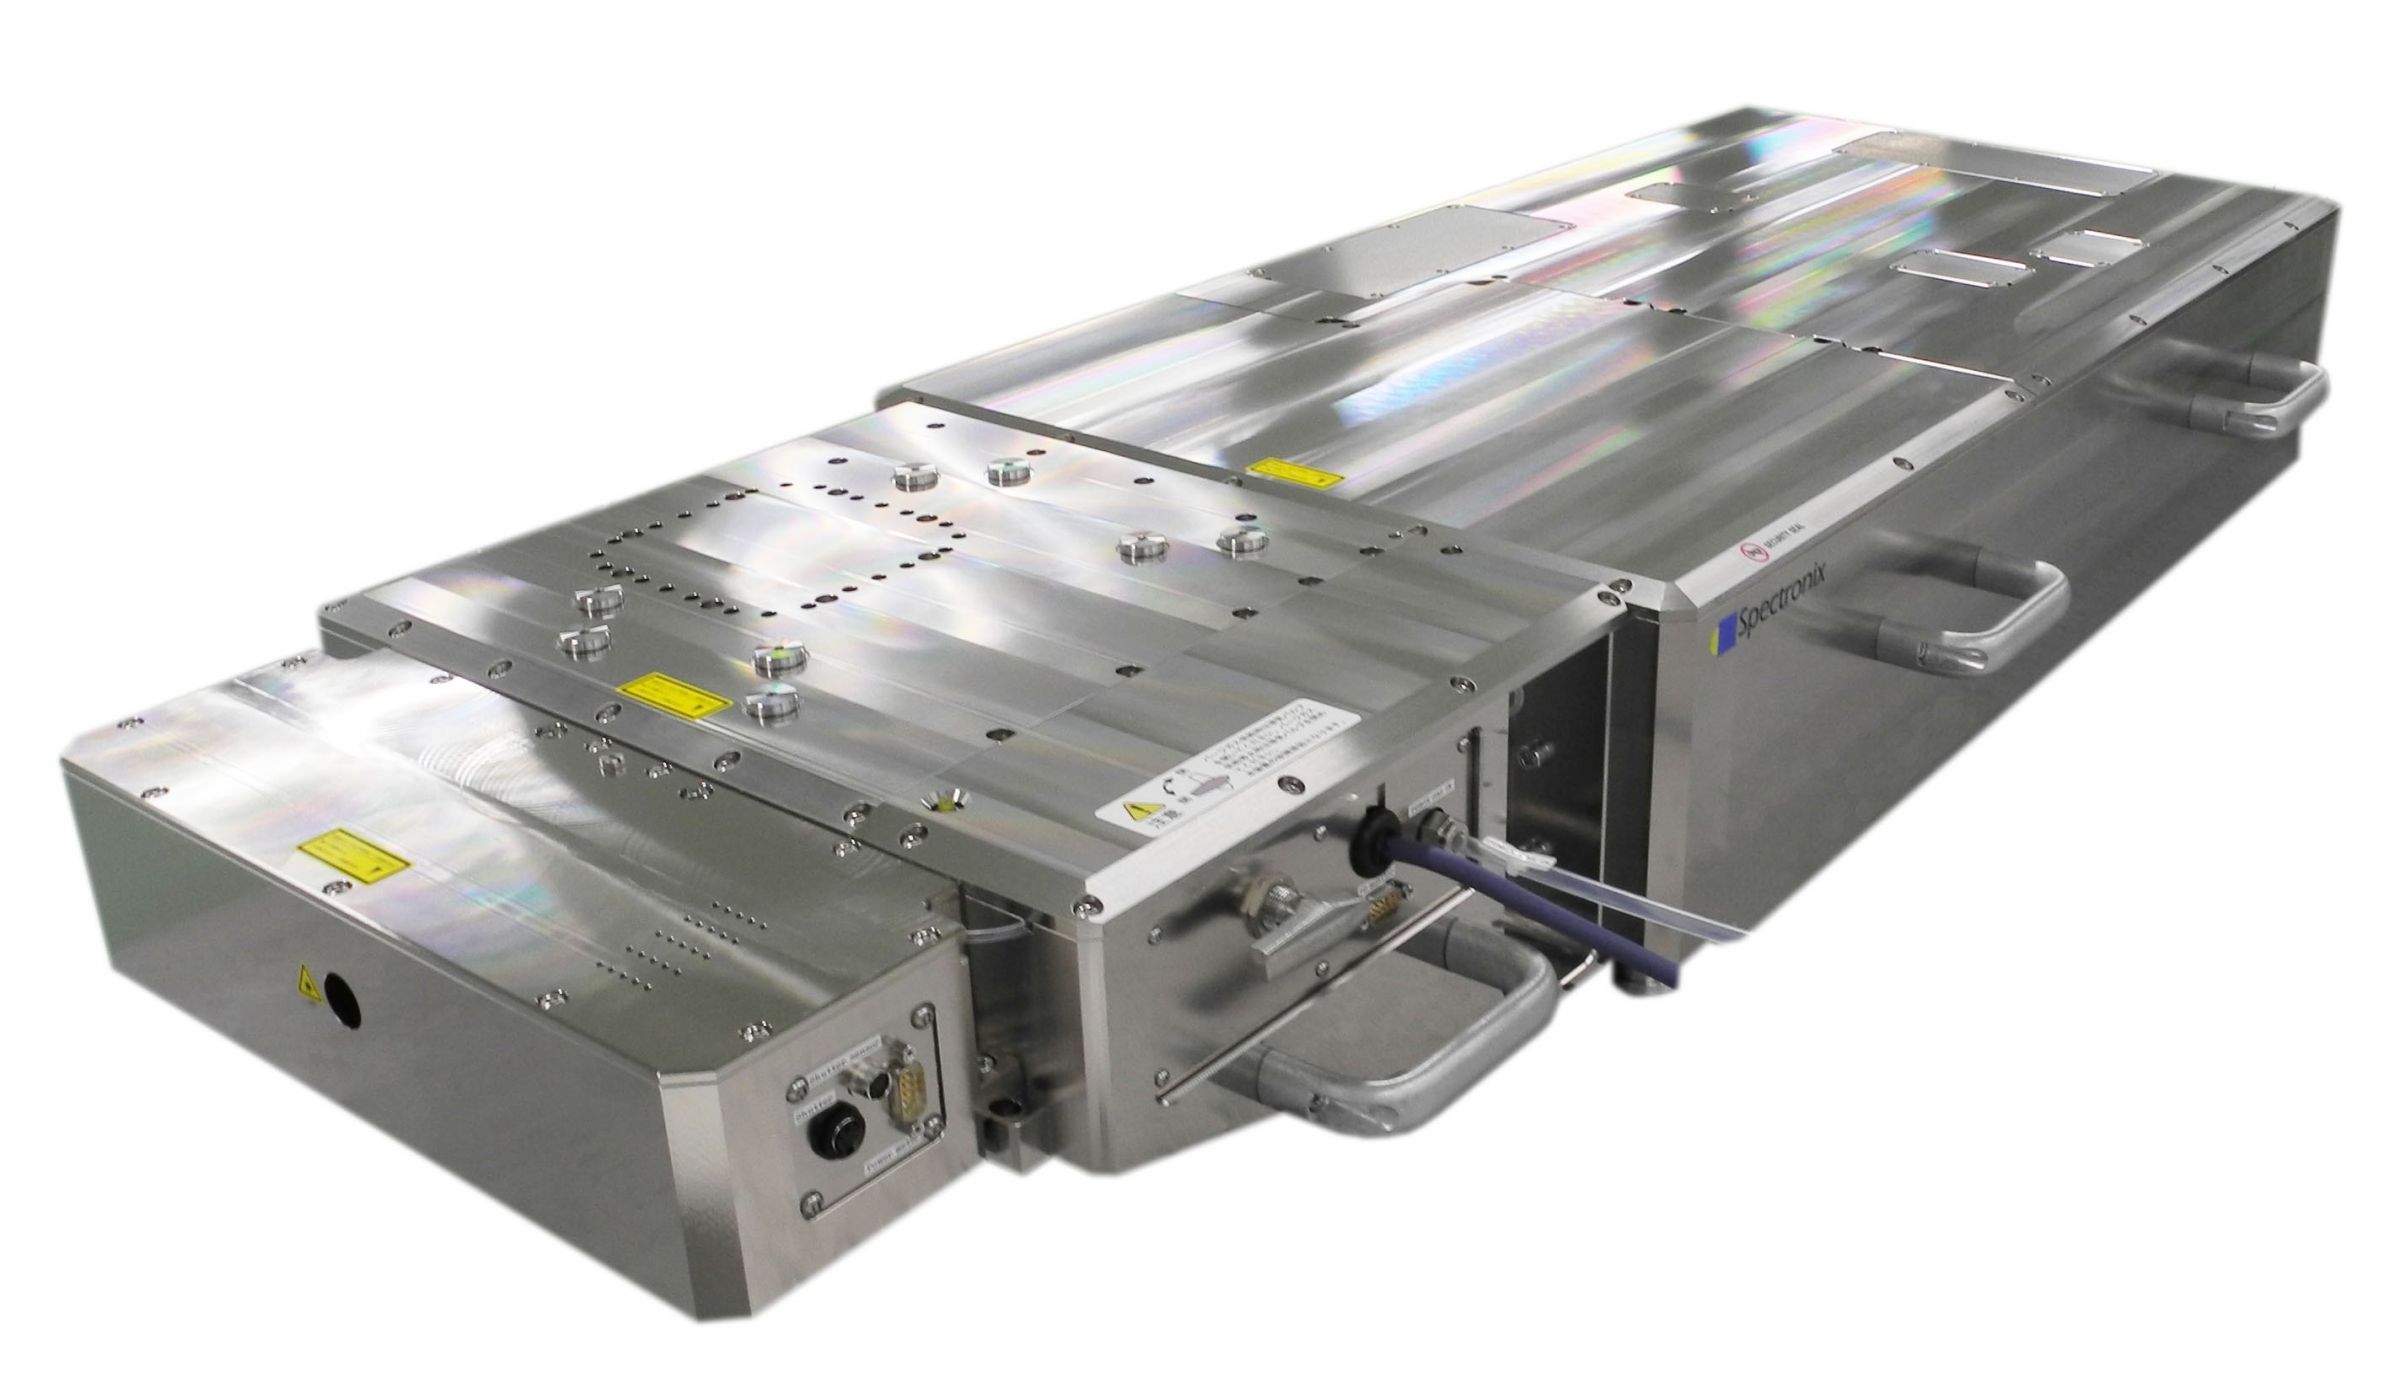 Hortech's ultrafast DUV laser OEM services